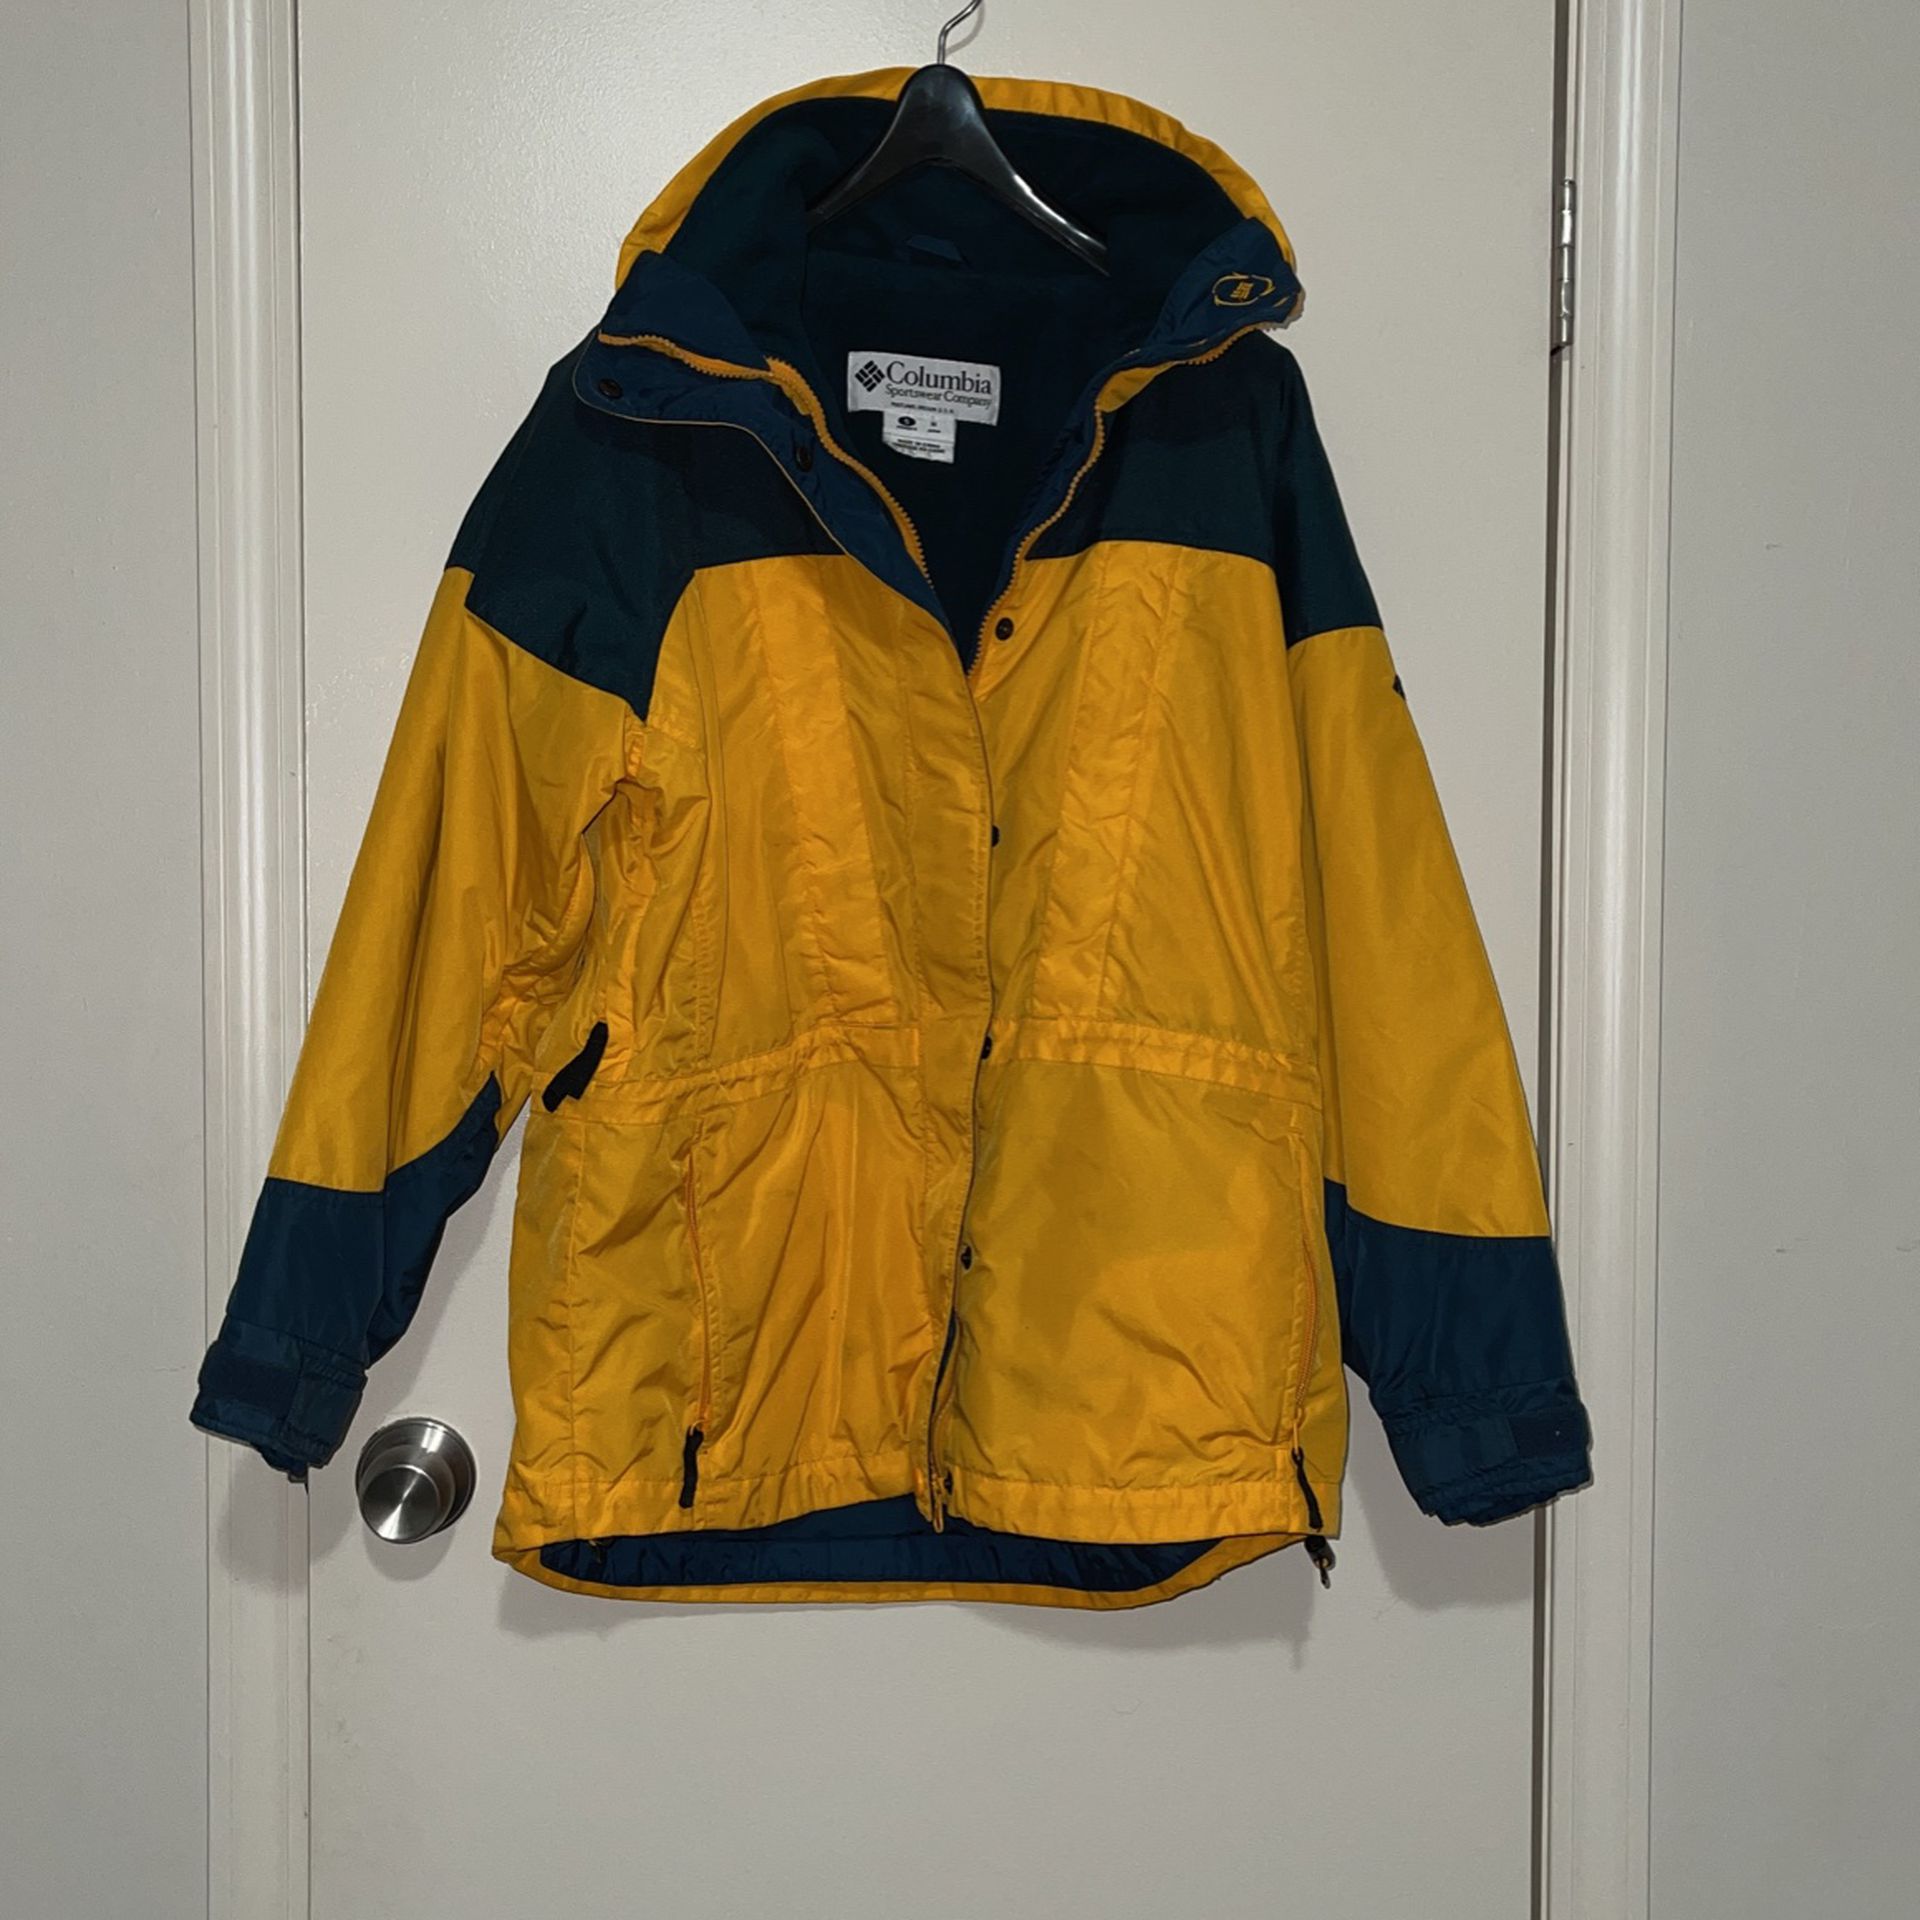 Women’s Columbia Ski Coat, Zippered Fleece Inner-Jacket, Yellow & Navy Blue, Small, Never Worn